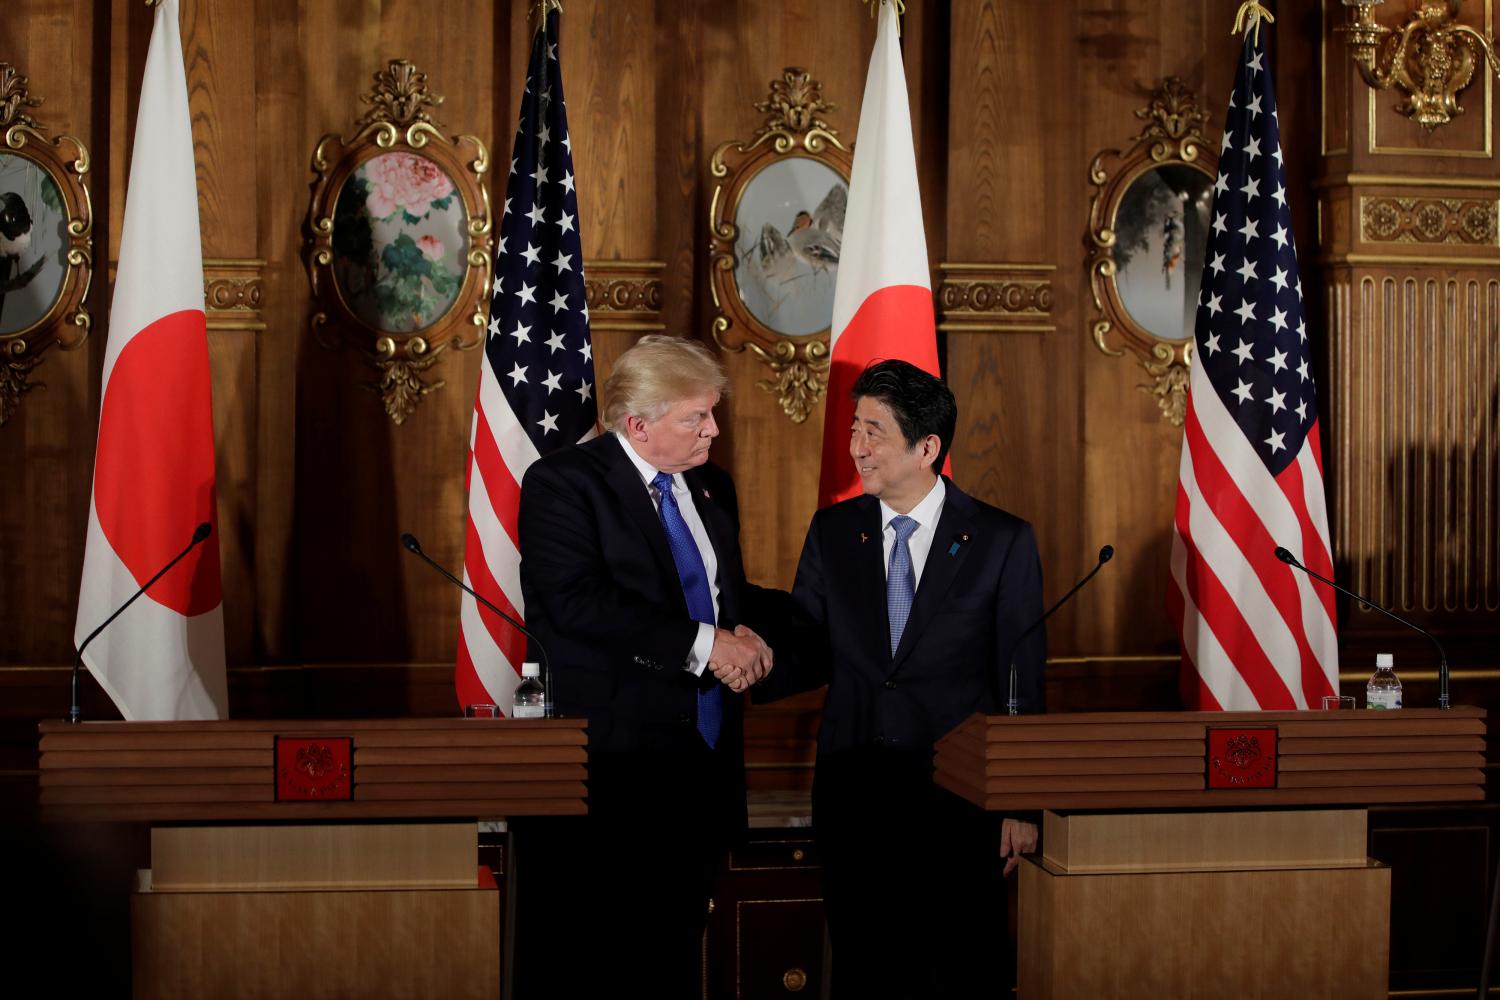 U.S. President Donald Trump, left, shakes hands with Shinzo Abe, Japan's prime minister, during a news conference at Akasaka Palace in Tokyo, Japan, November 6, 2017. REUTERS/Kiyoshi Ota/Pool - RC1C9C826580